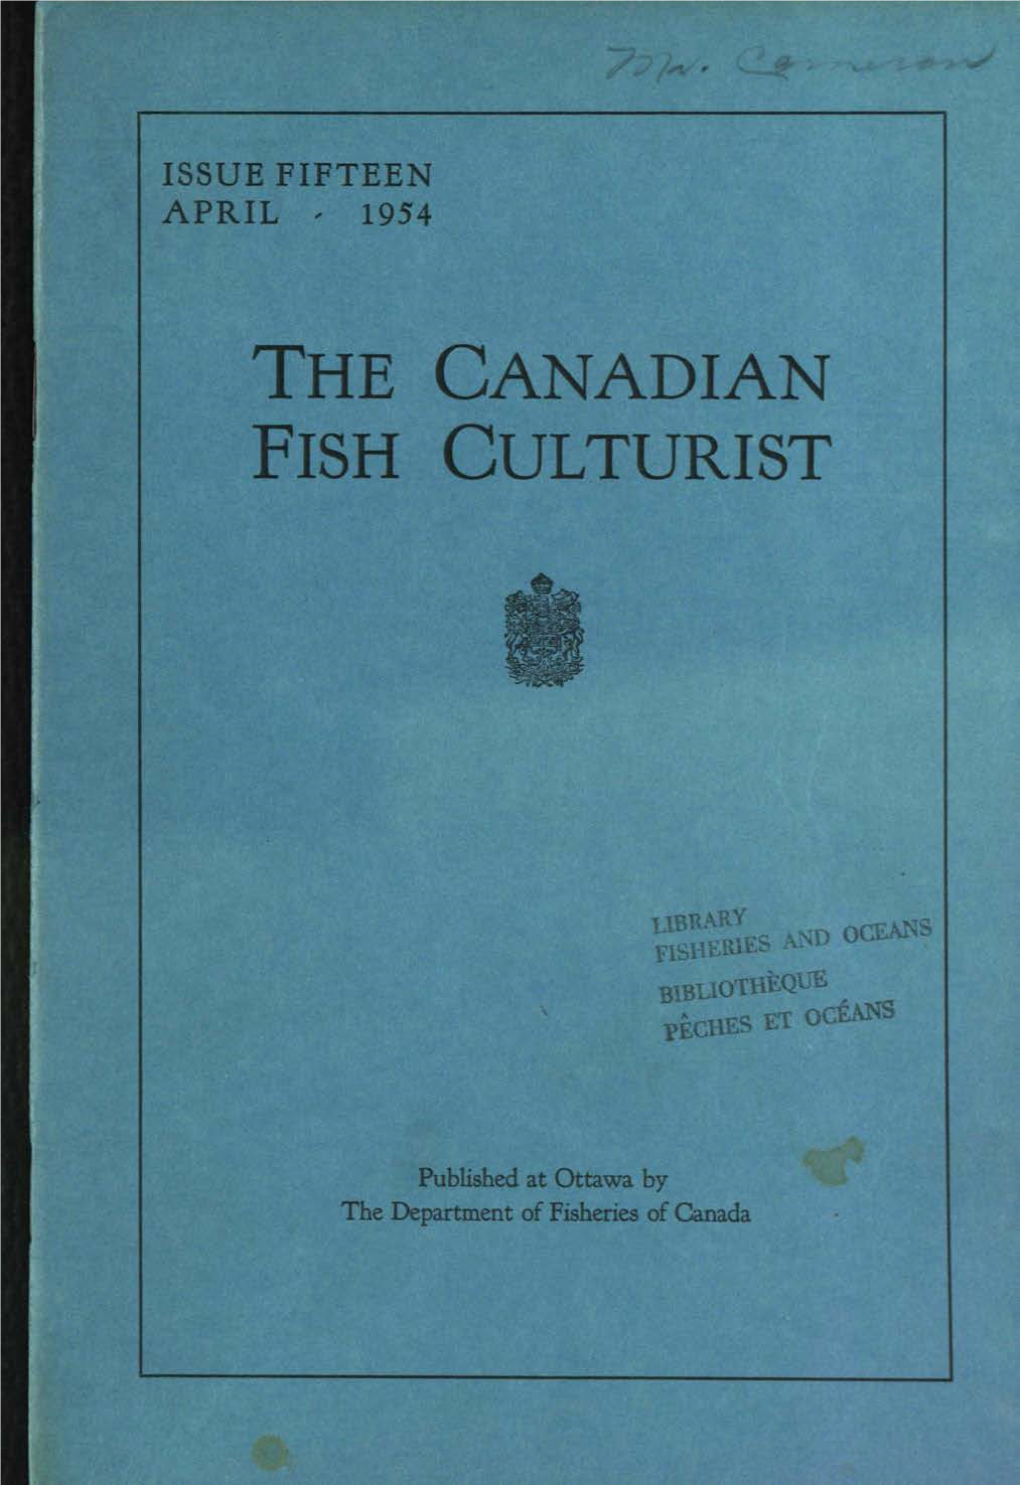 The Canadian Fish Culturist